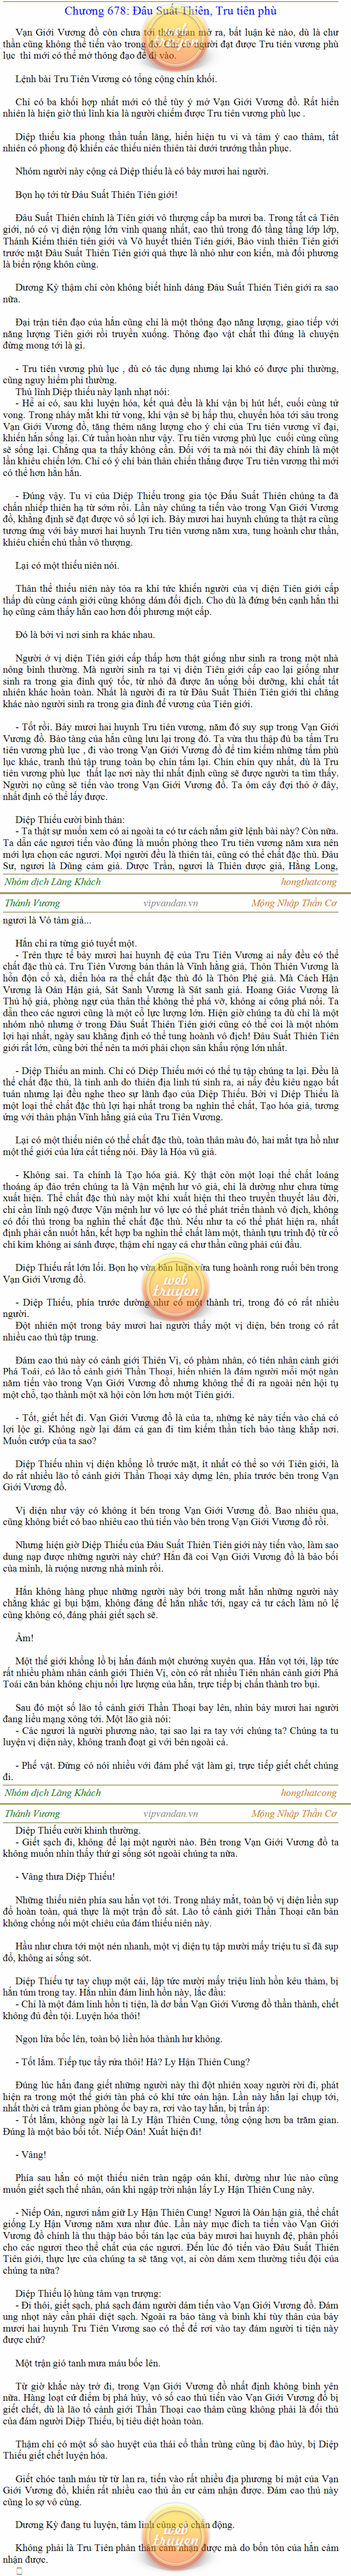 Thanh-vuong-678.png